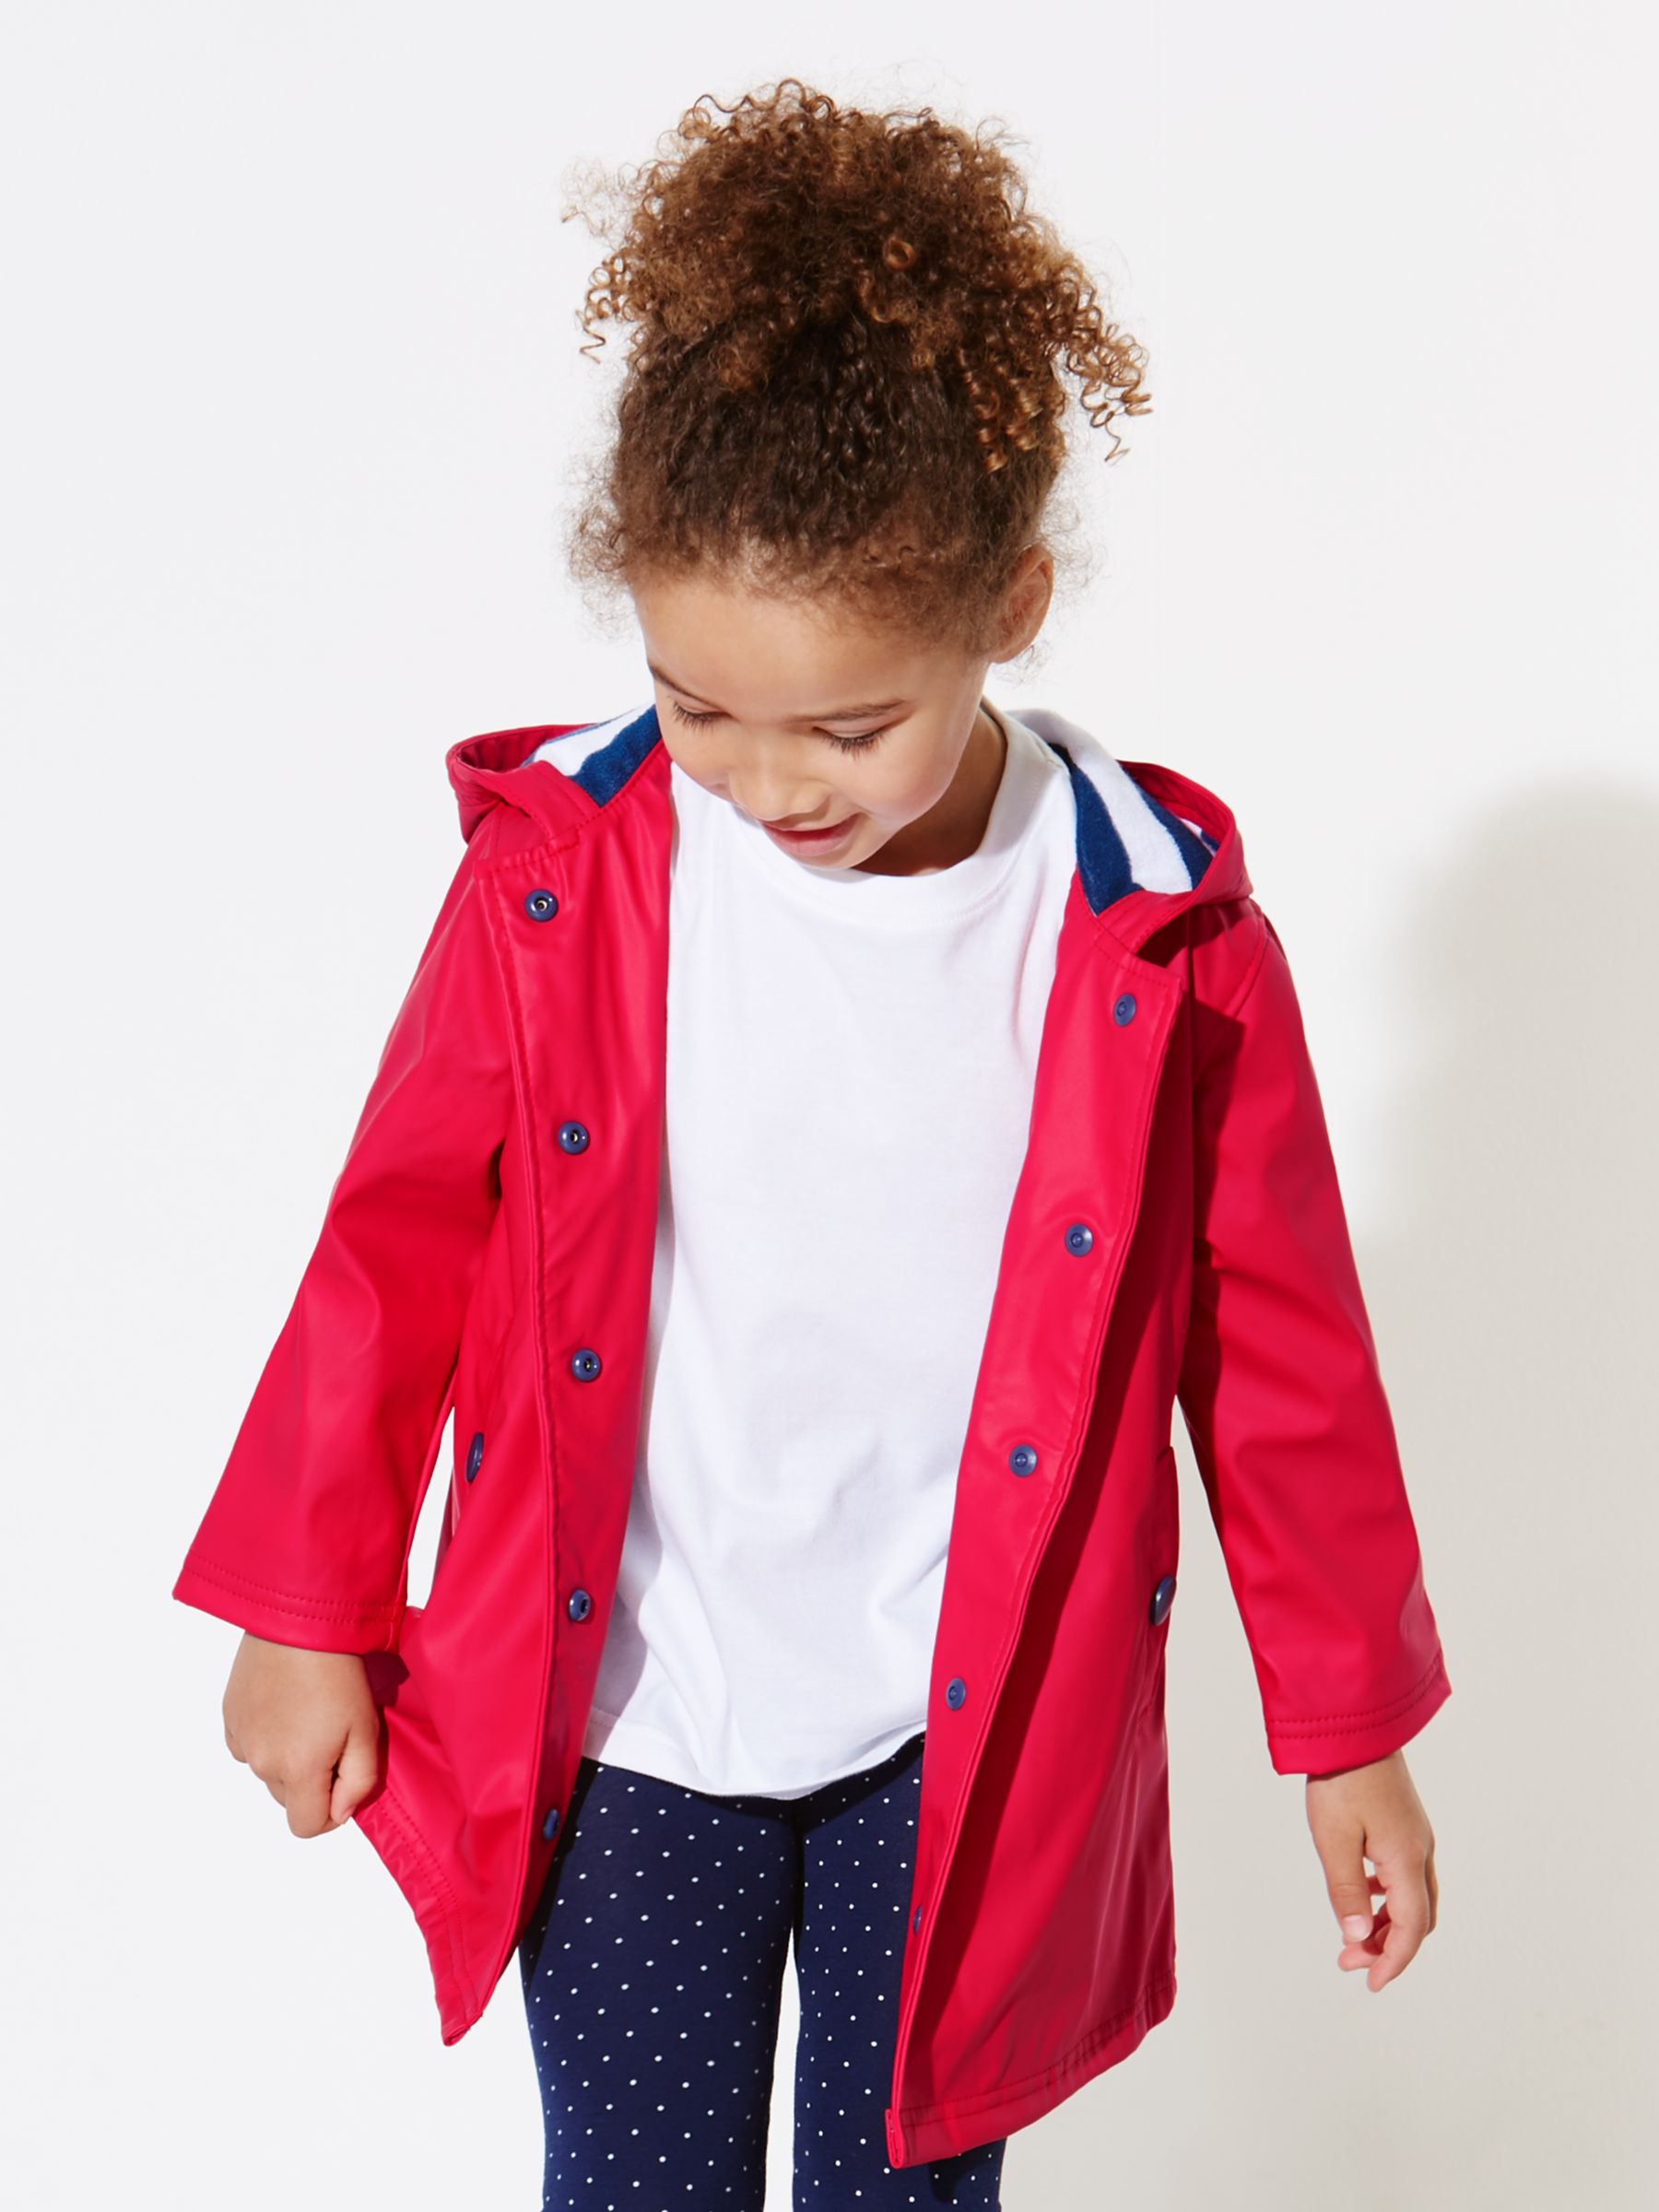 Hatley Girls' Splash Jacket, Red, 2 years